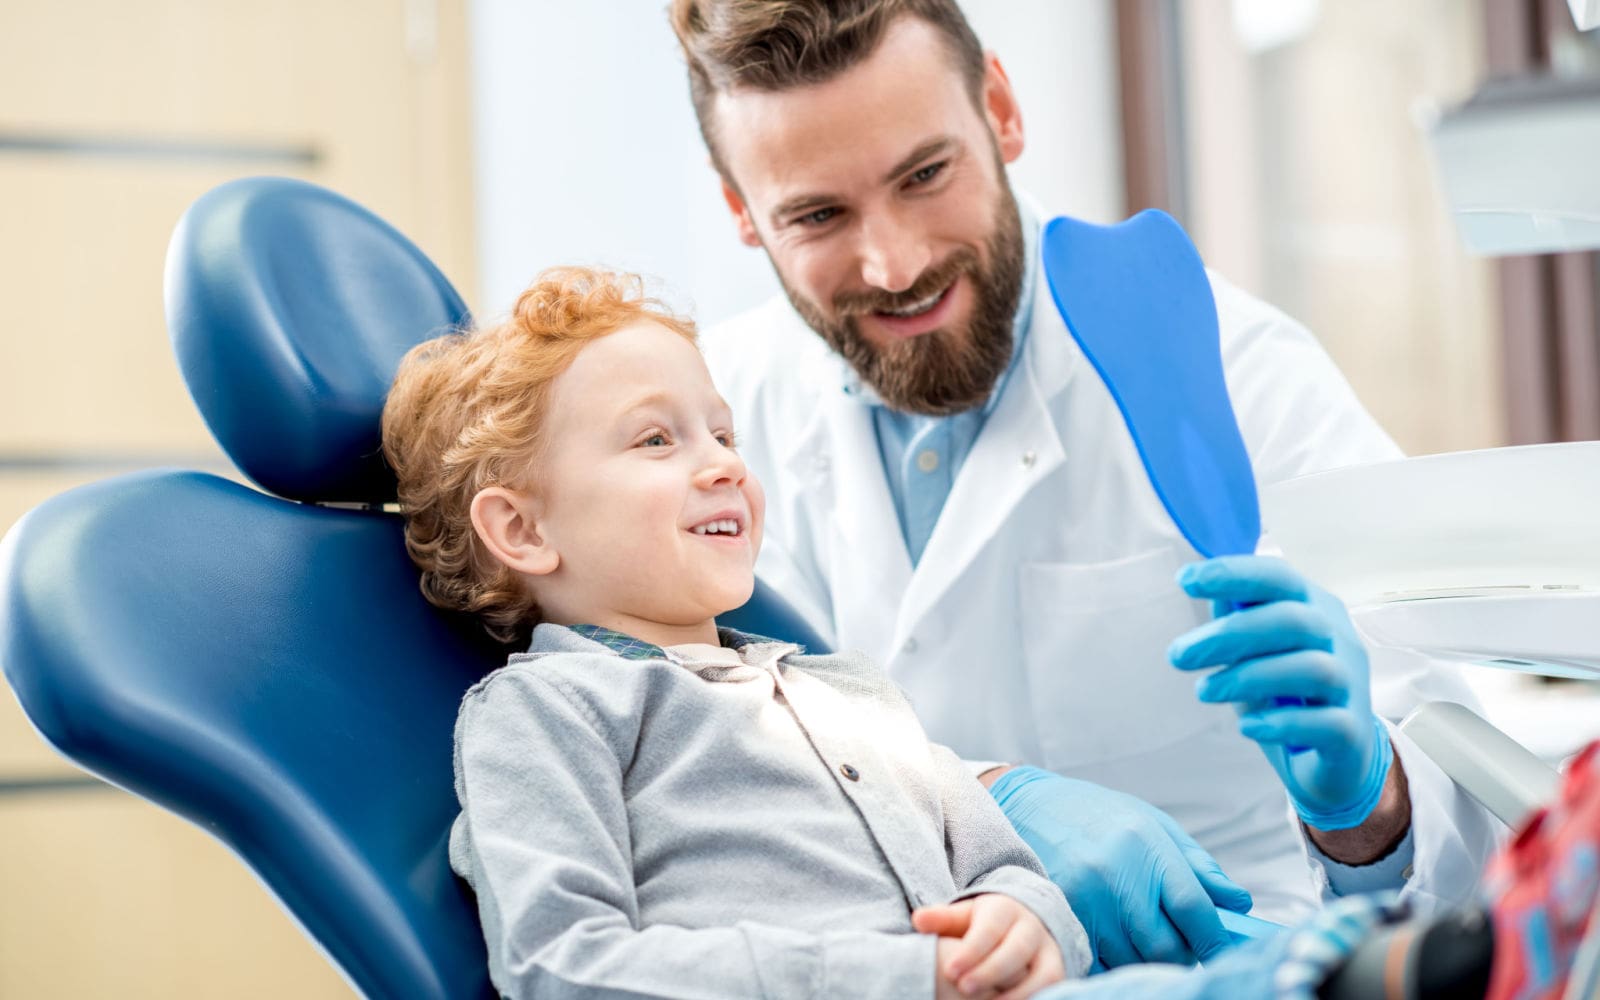 Pediatric Dentist Caring For Child Patient